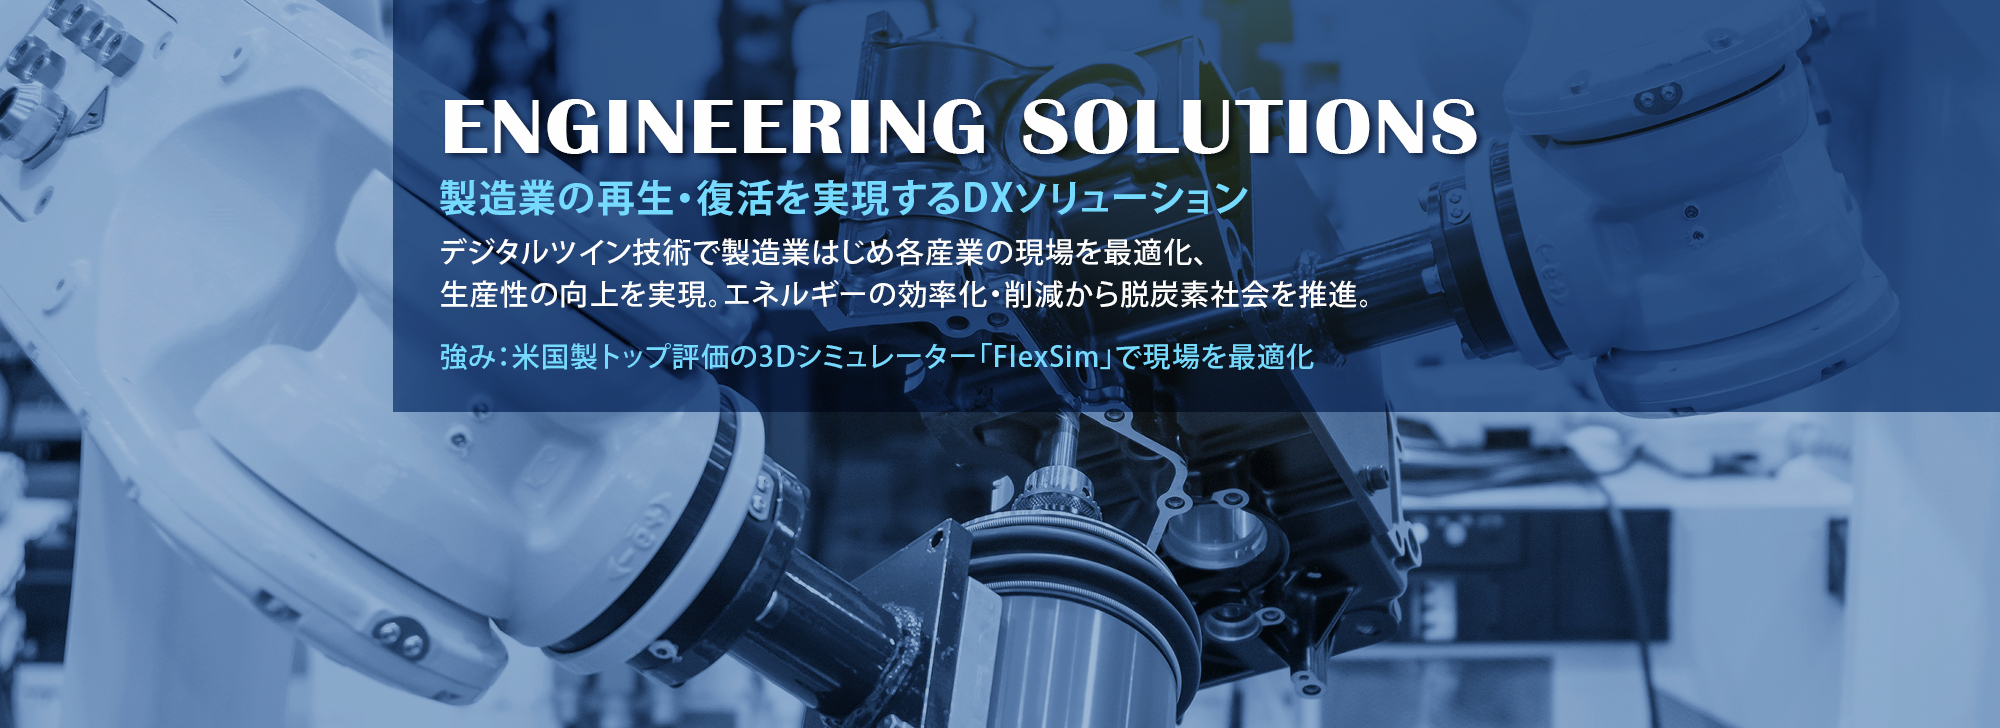 Engineering Solutions-スライド